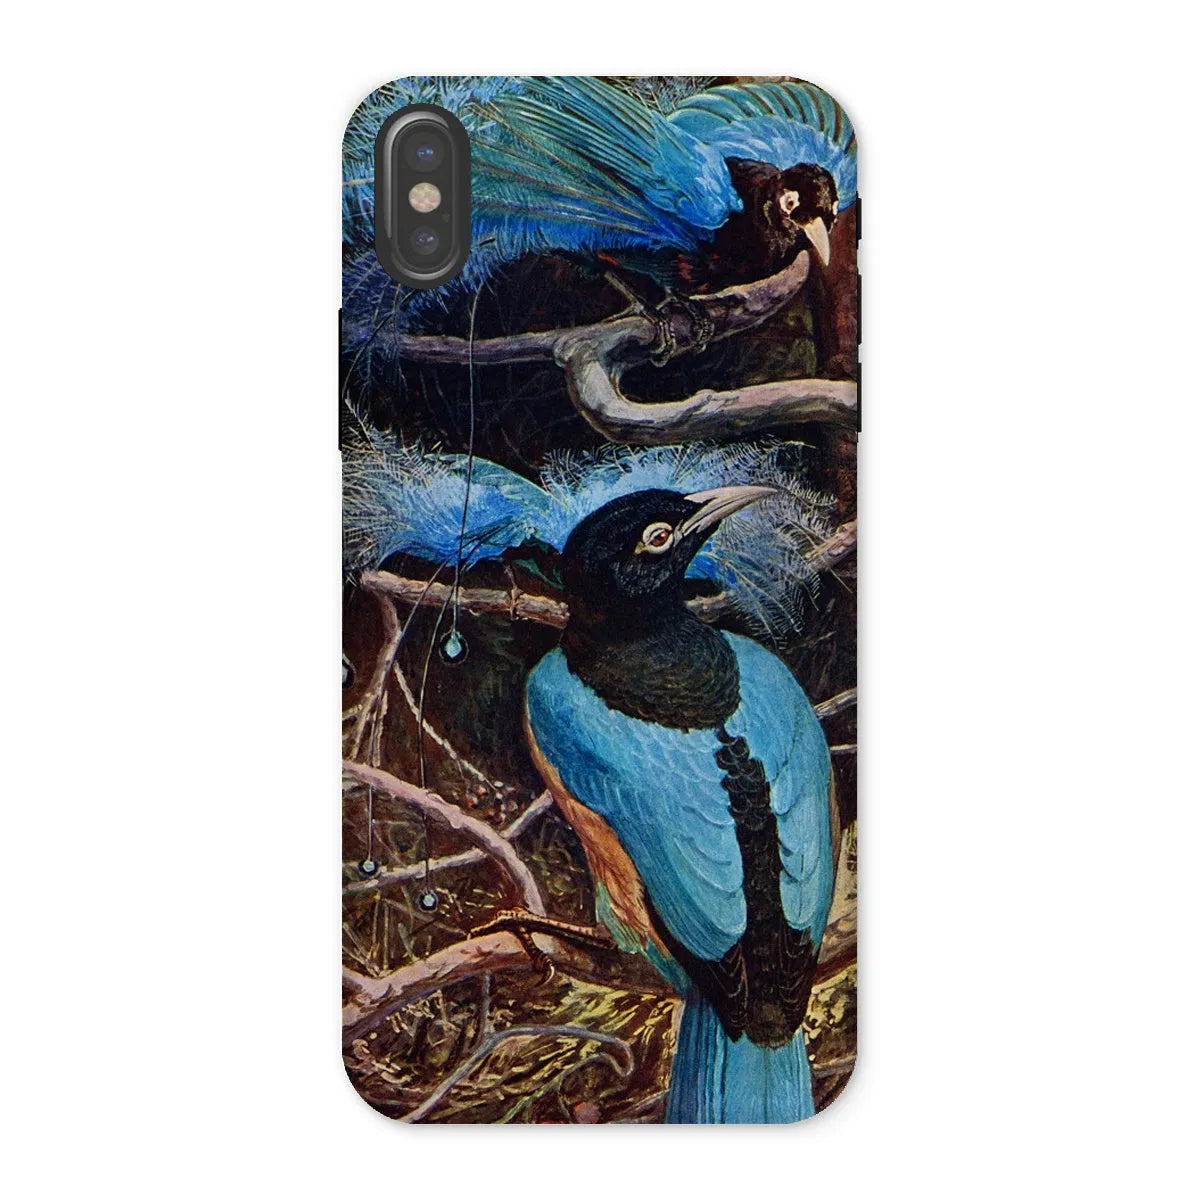 Blue Bird Of Paradise Aesthetic Phone Case - Henry Johnston - Iphone x / Matte - Mobile Phone Cases - Aesthetic Art